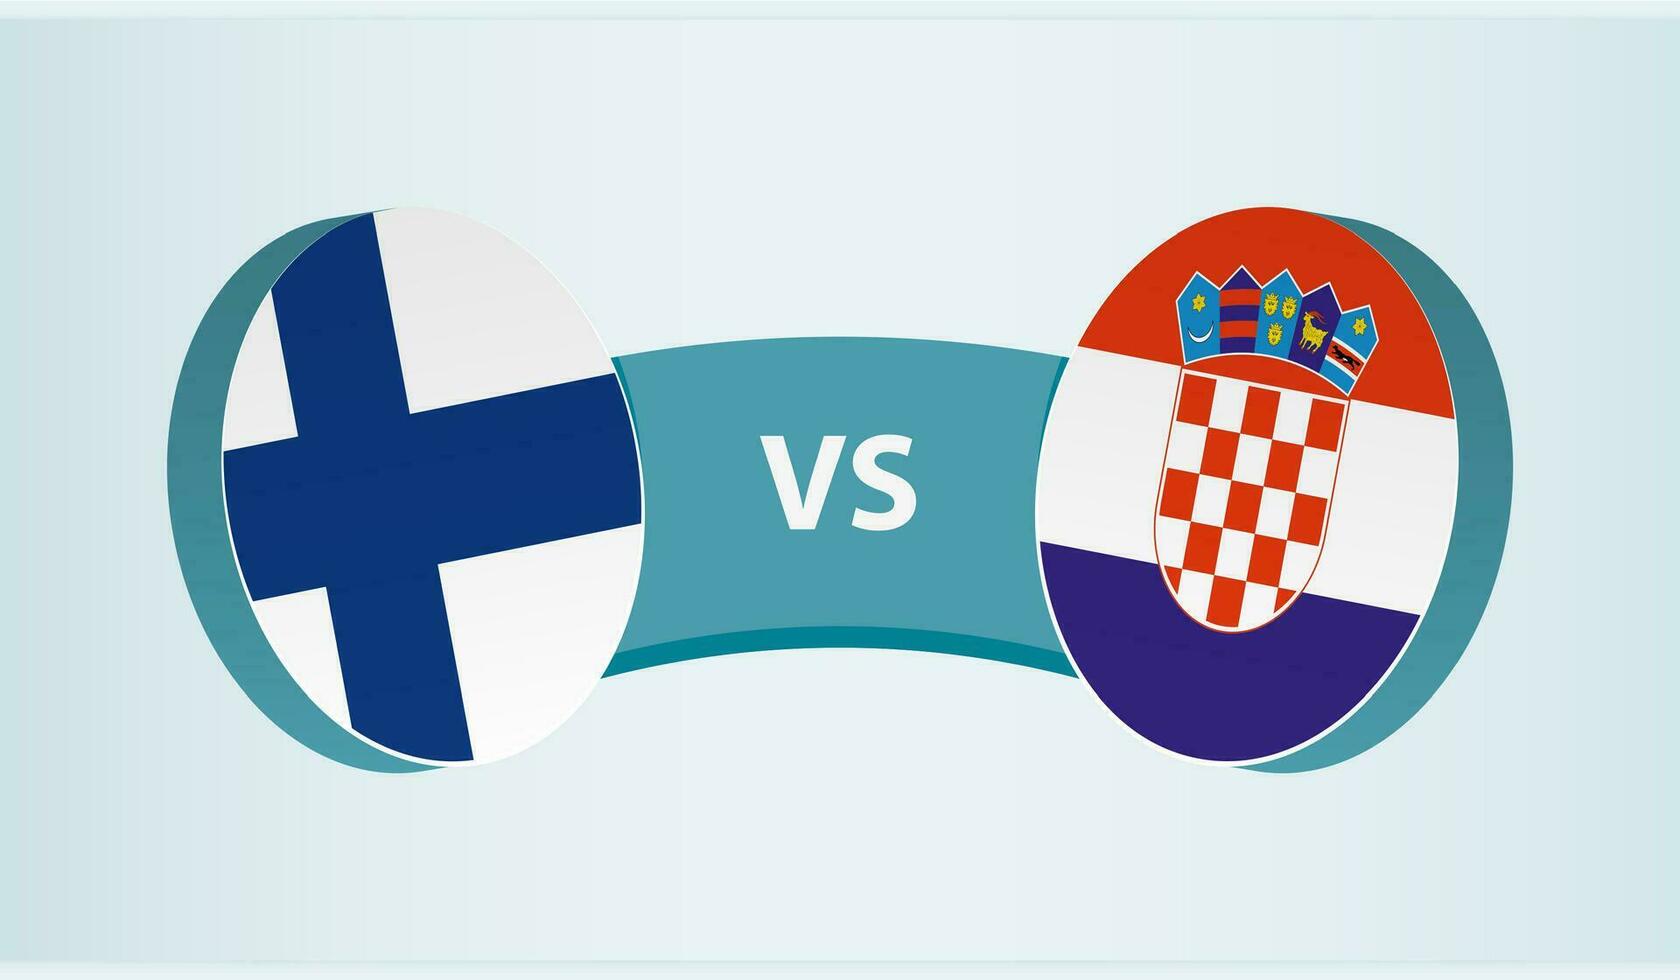 Finland versus Croatia, team sports competition concept. vector